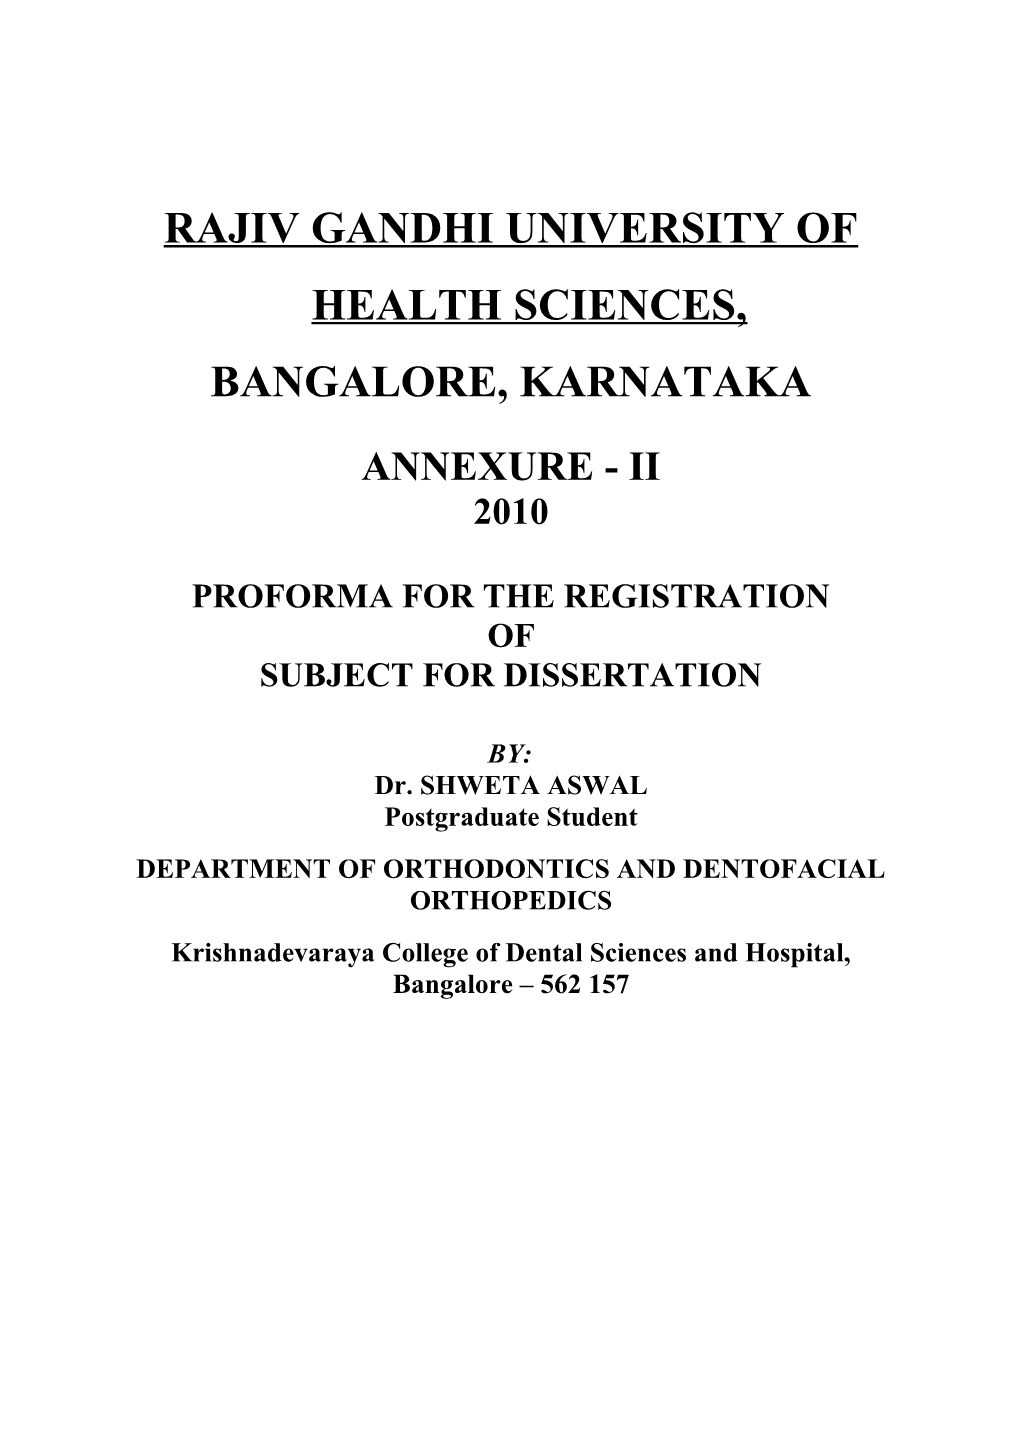 Rajiv Gandhi University of Health Sciences s37